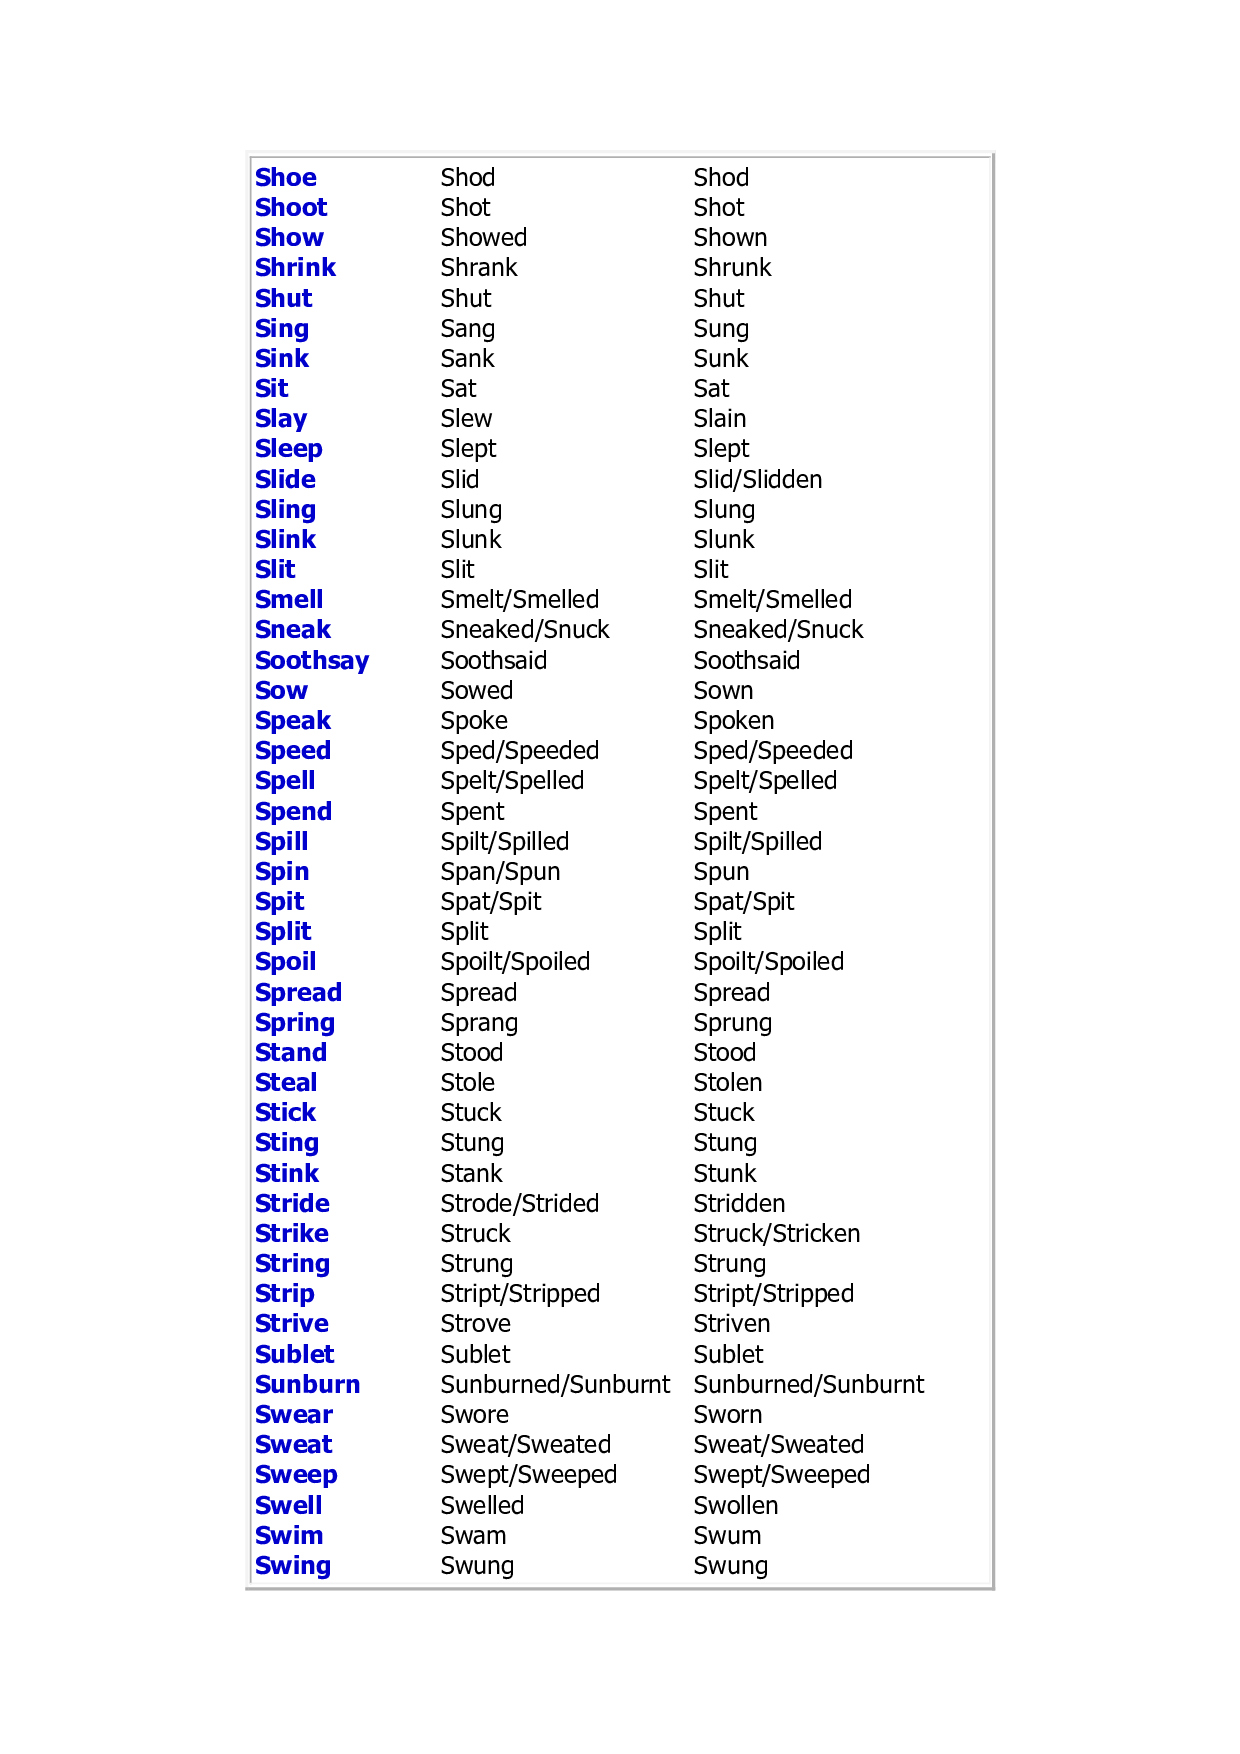 complete english irregular verbs list